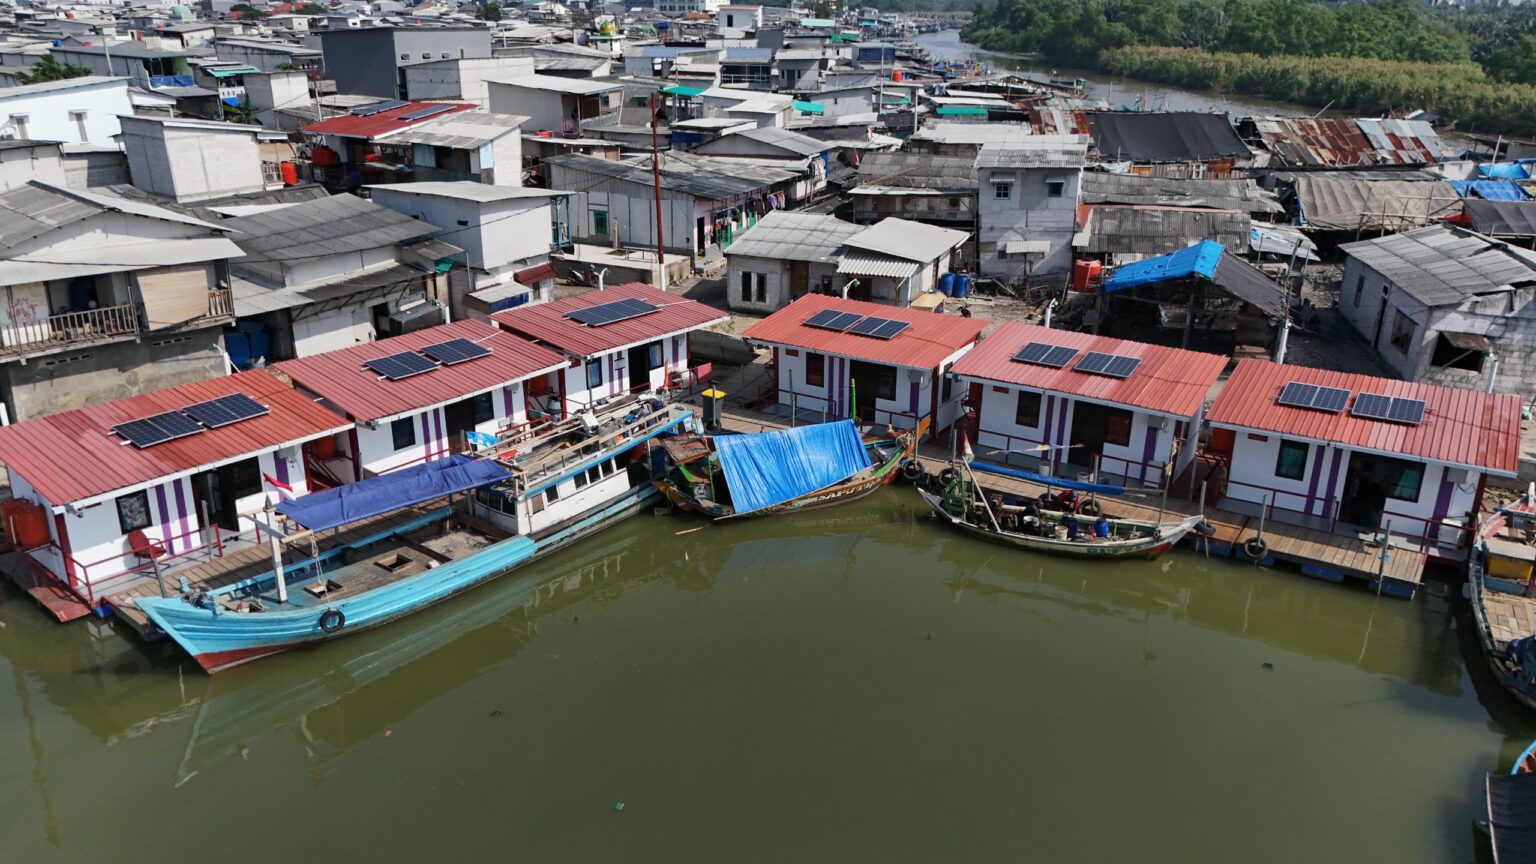 Prabowo Subianto Gives Floating Homes, Jakarta Fishermen’s Village Expresses Gratitude